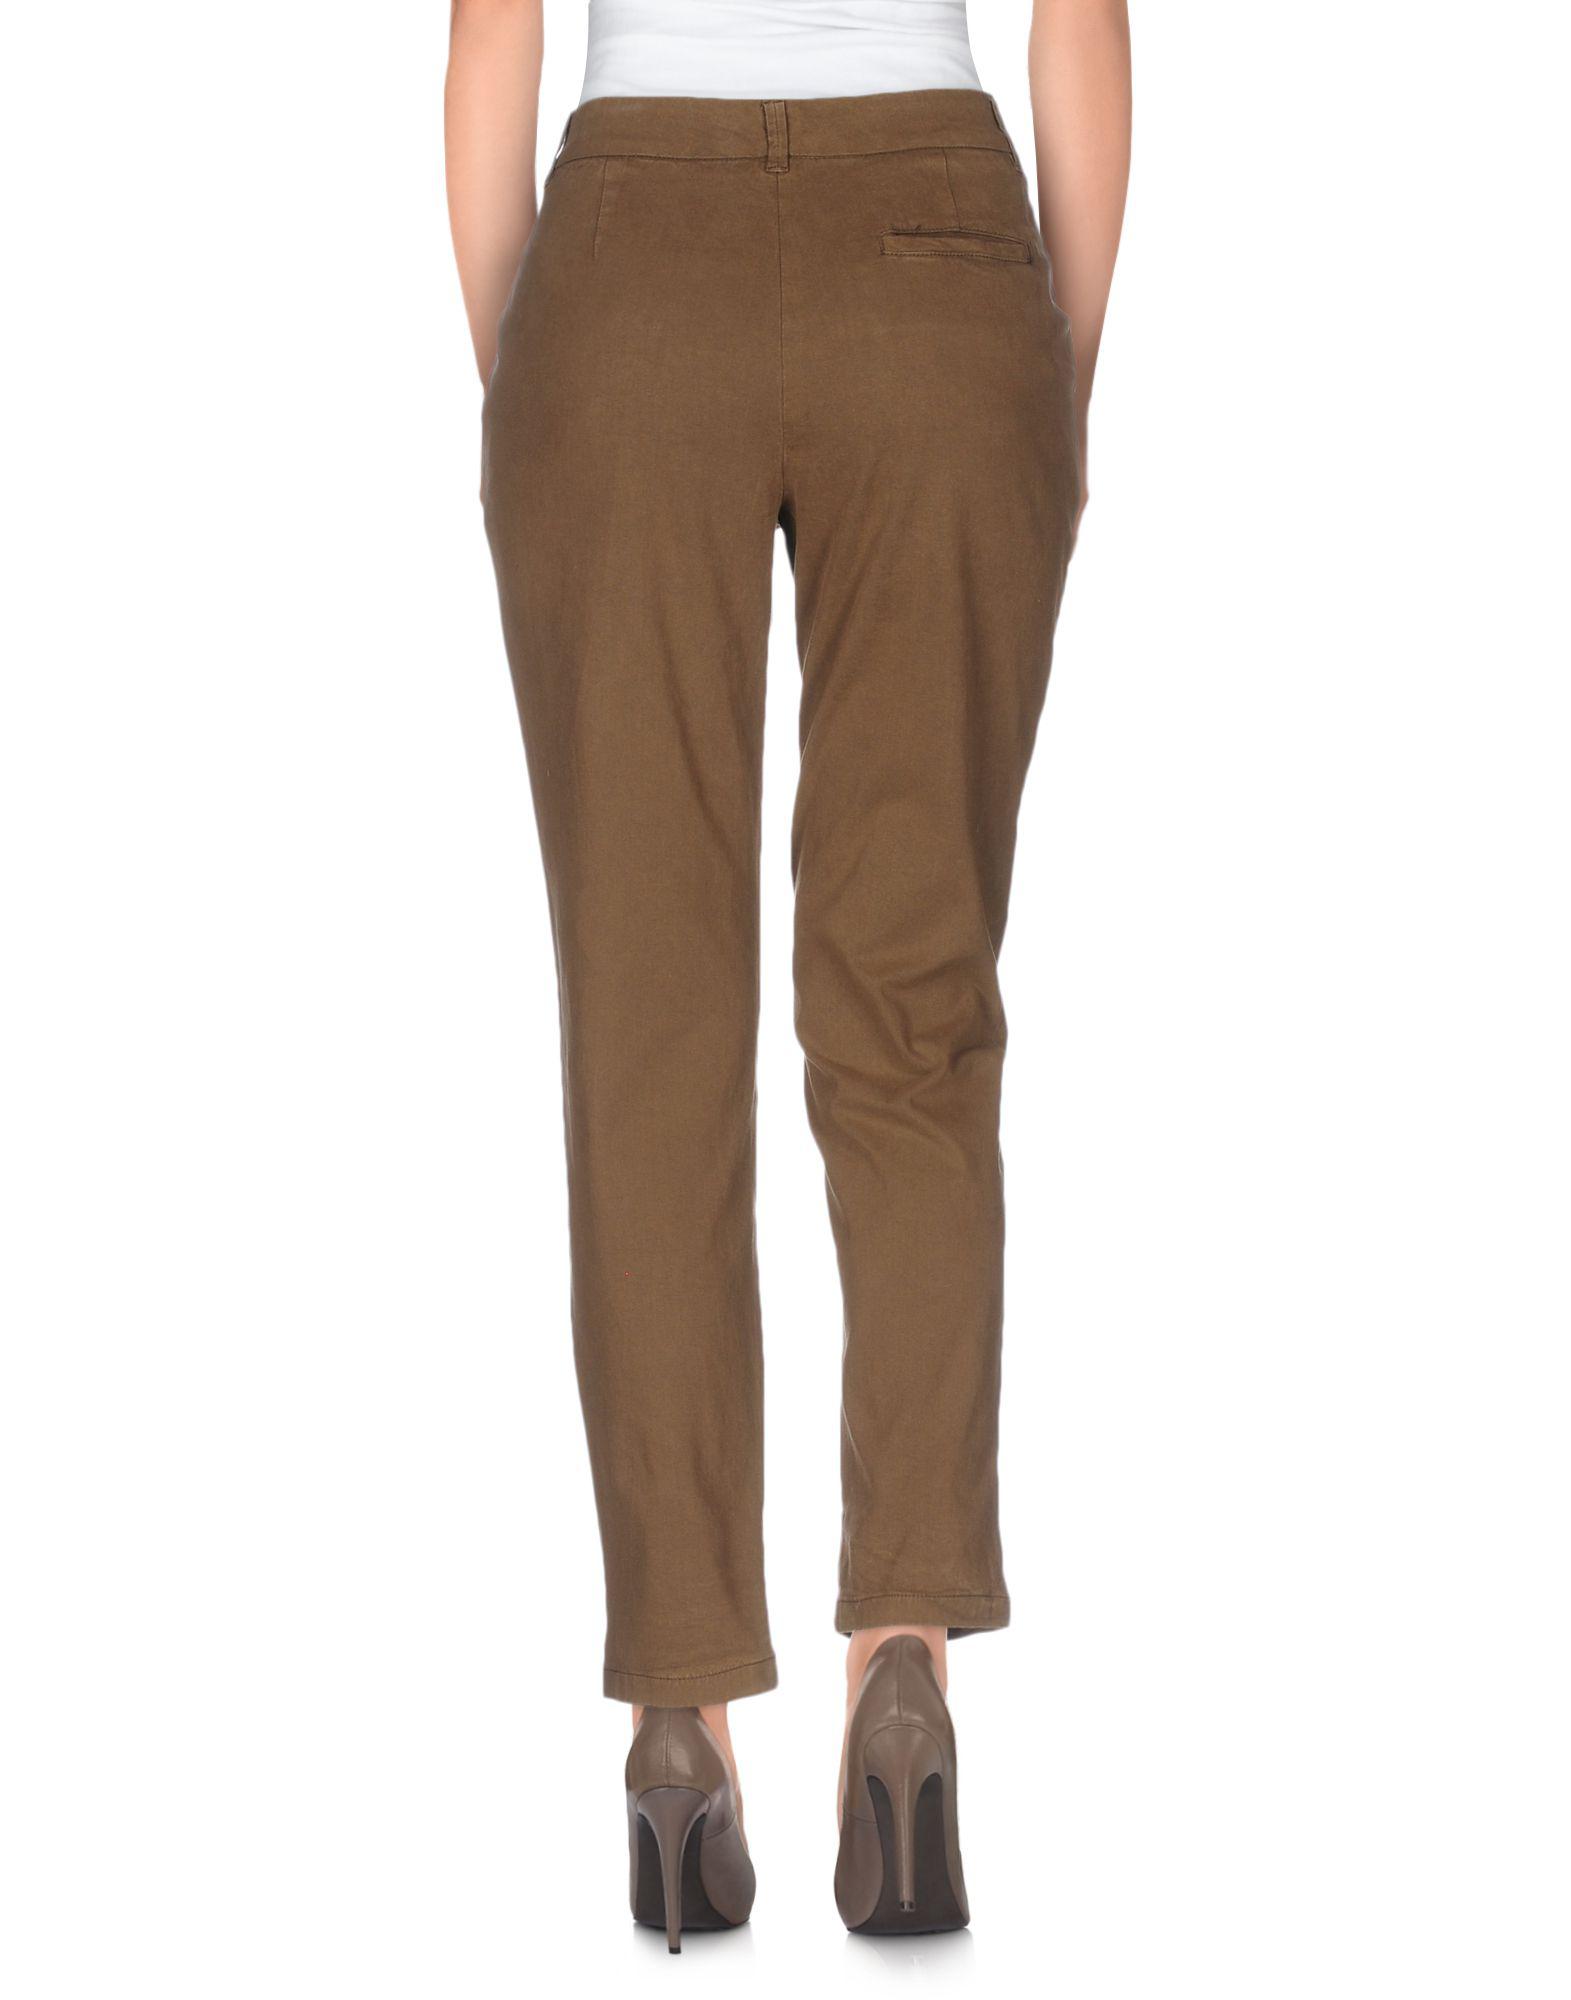 Momoní Cotton Casual Pants in Khaki (Brown) - Lyst